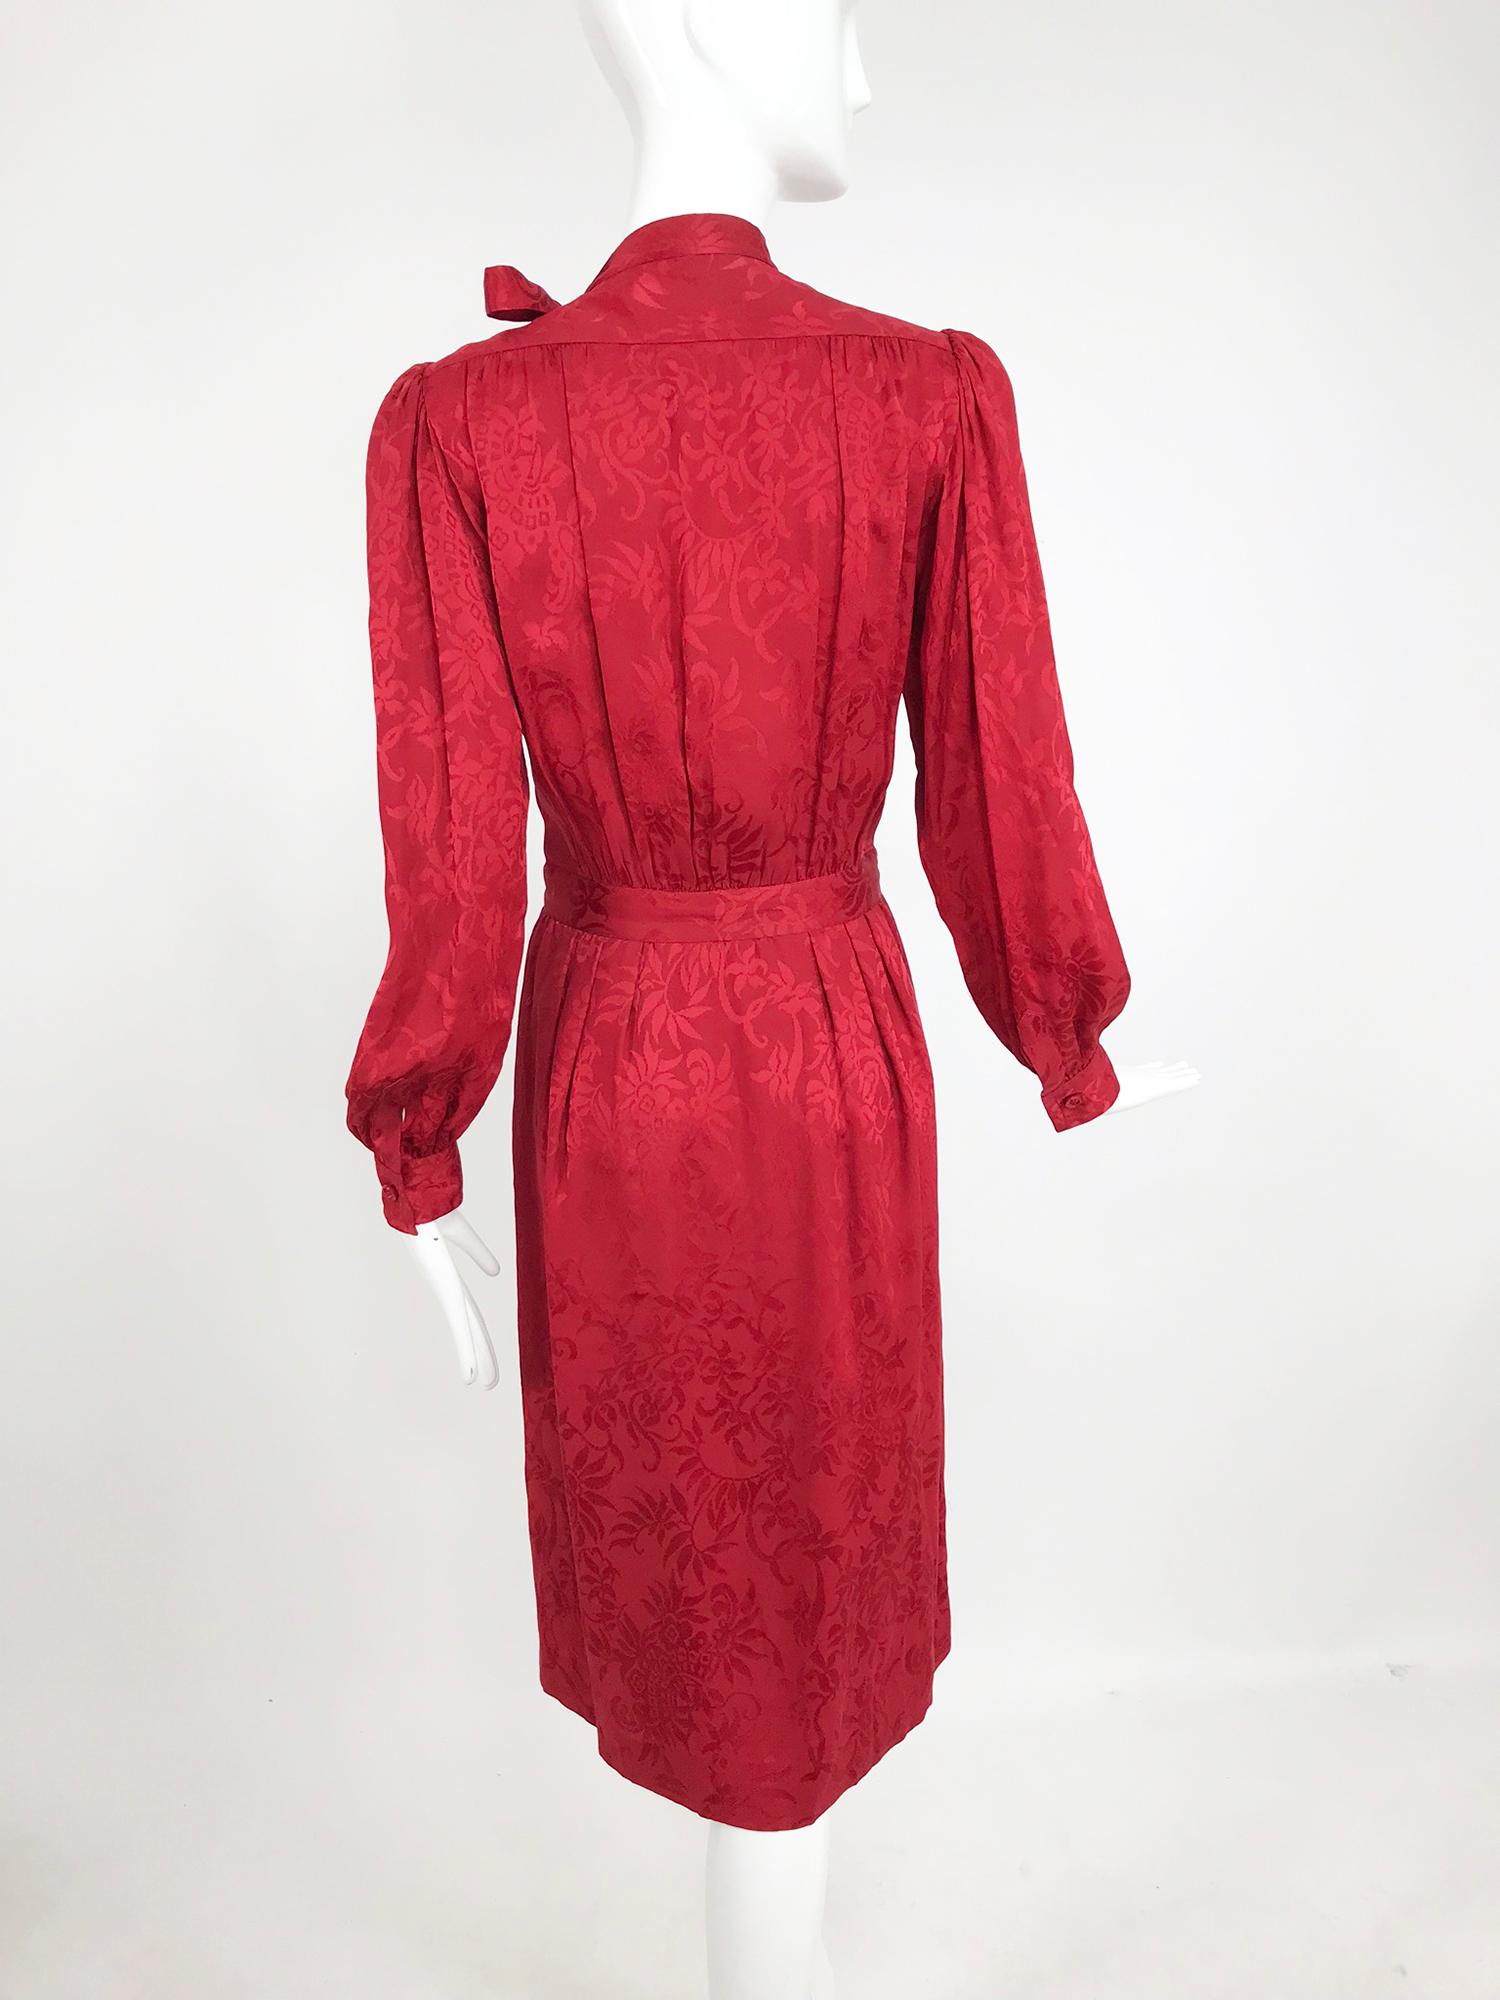 Yves Saint Laurent Red Silk Jacquard Bow Tie Dress 1970s 6